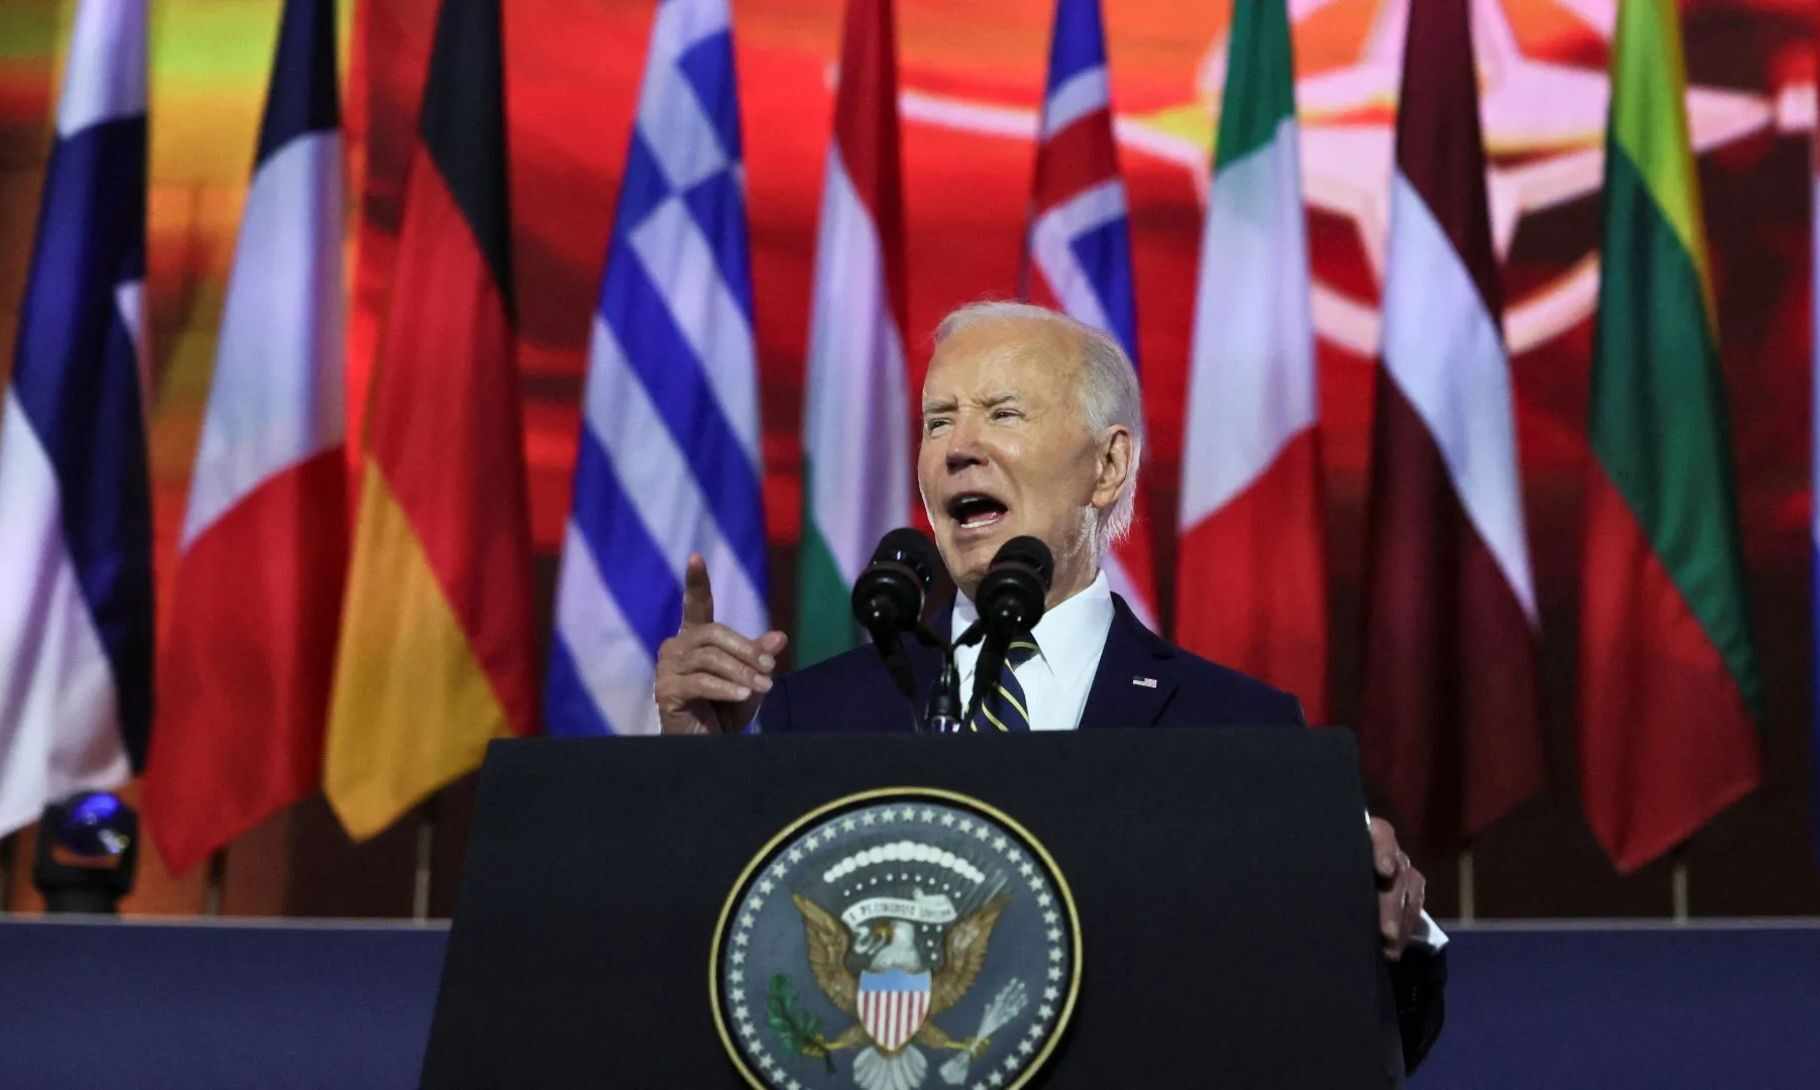 NATO Leaders Defend Biden’s Fitness Amid Health Concerns